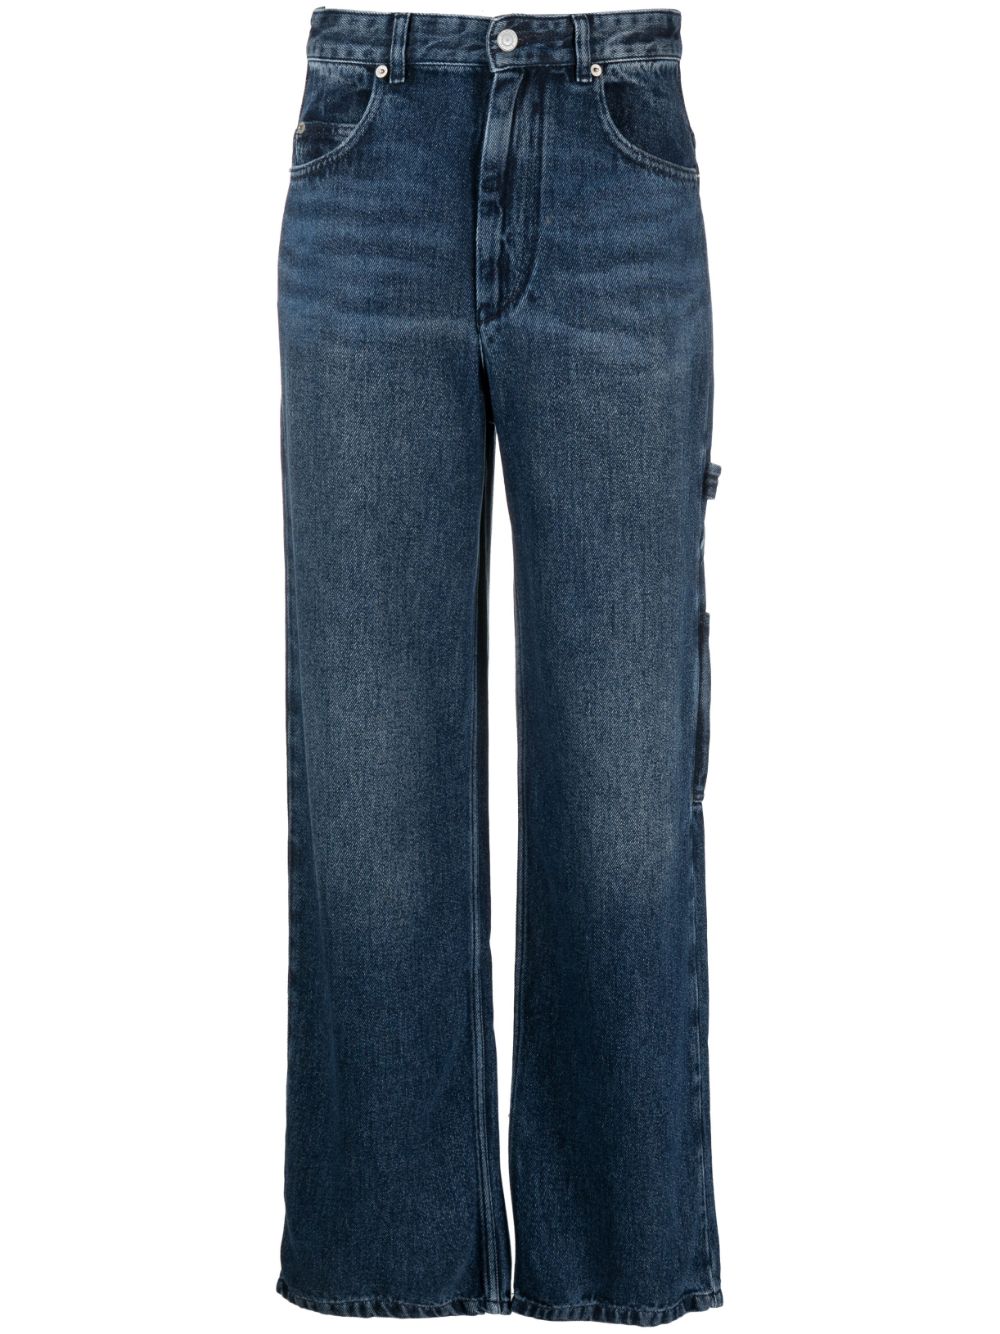 Straight-leg cotton jeans